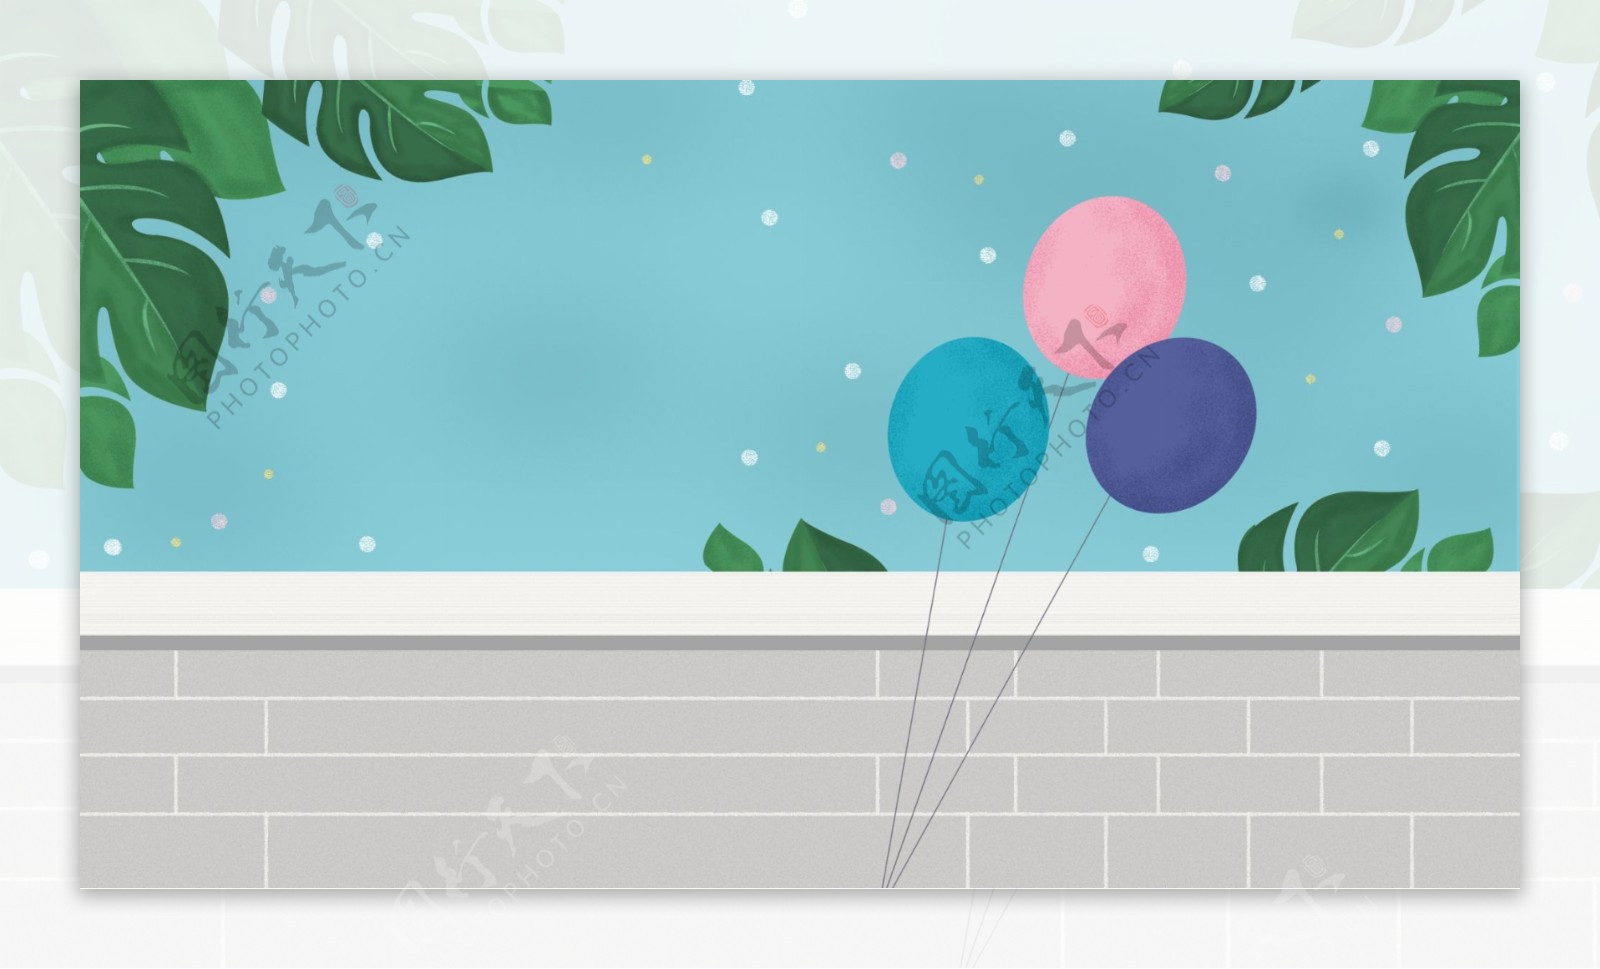 清新气球树叶围墙banner背景设计